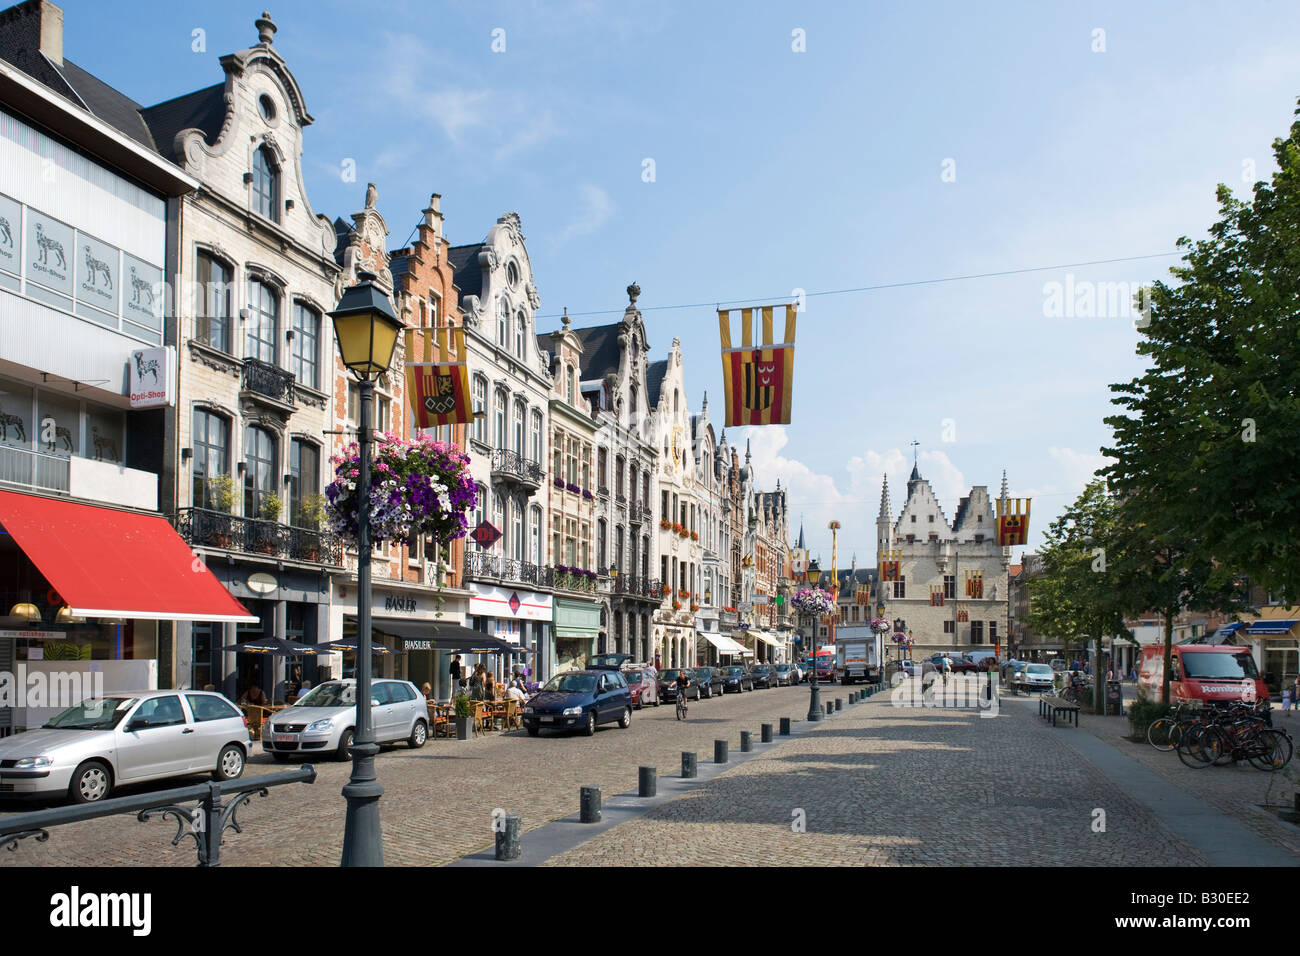 Shops on Ijzerenleen in the centre of the old town, Mechelen, Belgium Stock Photo